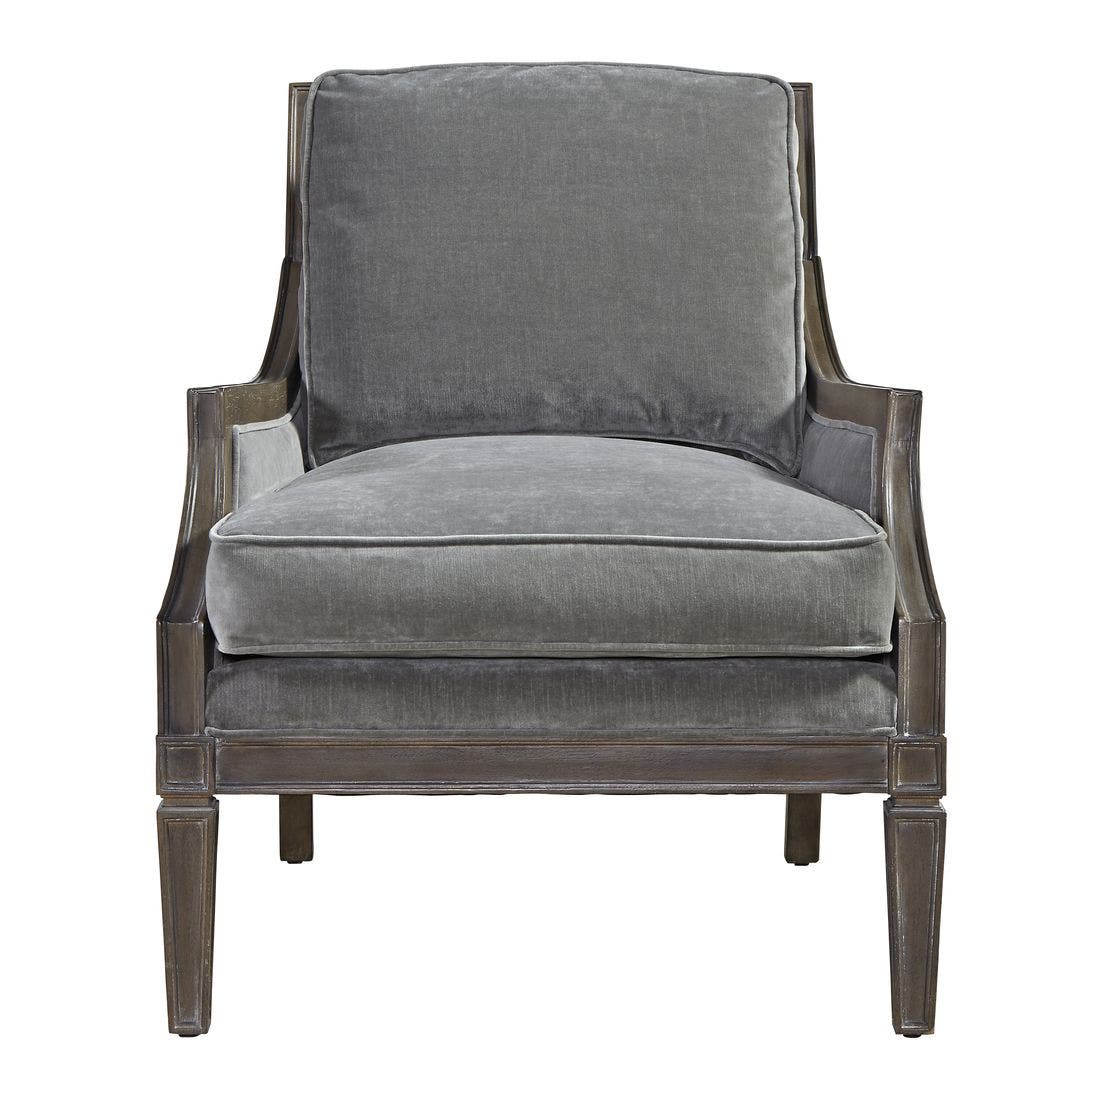 19134587-530515-200-furniture-sofa-recliner-armchair-01